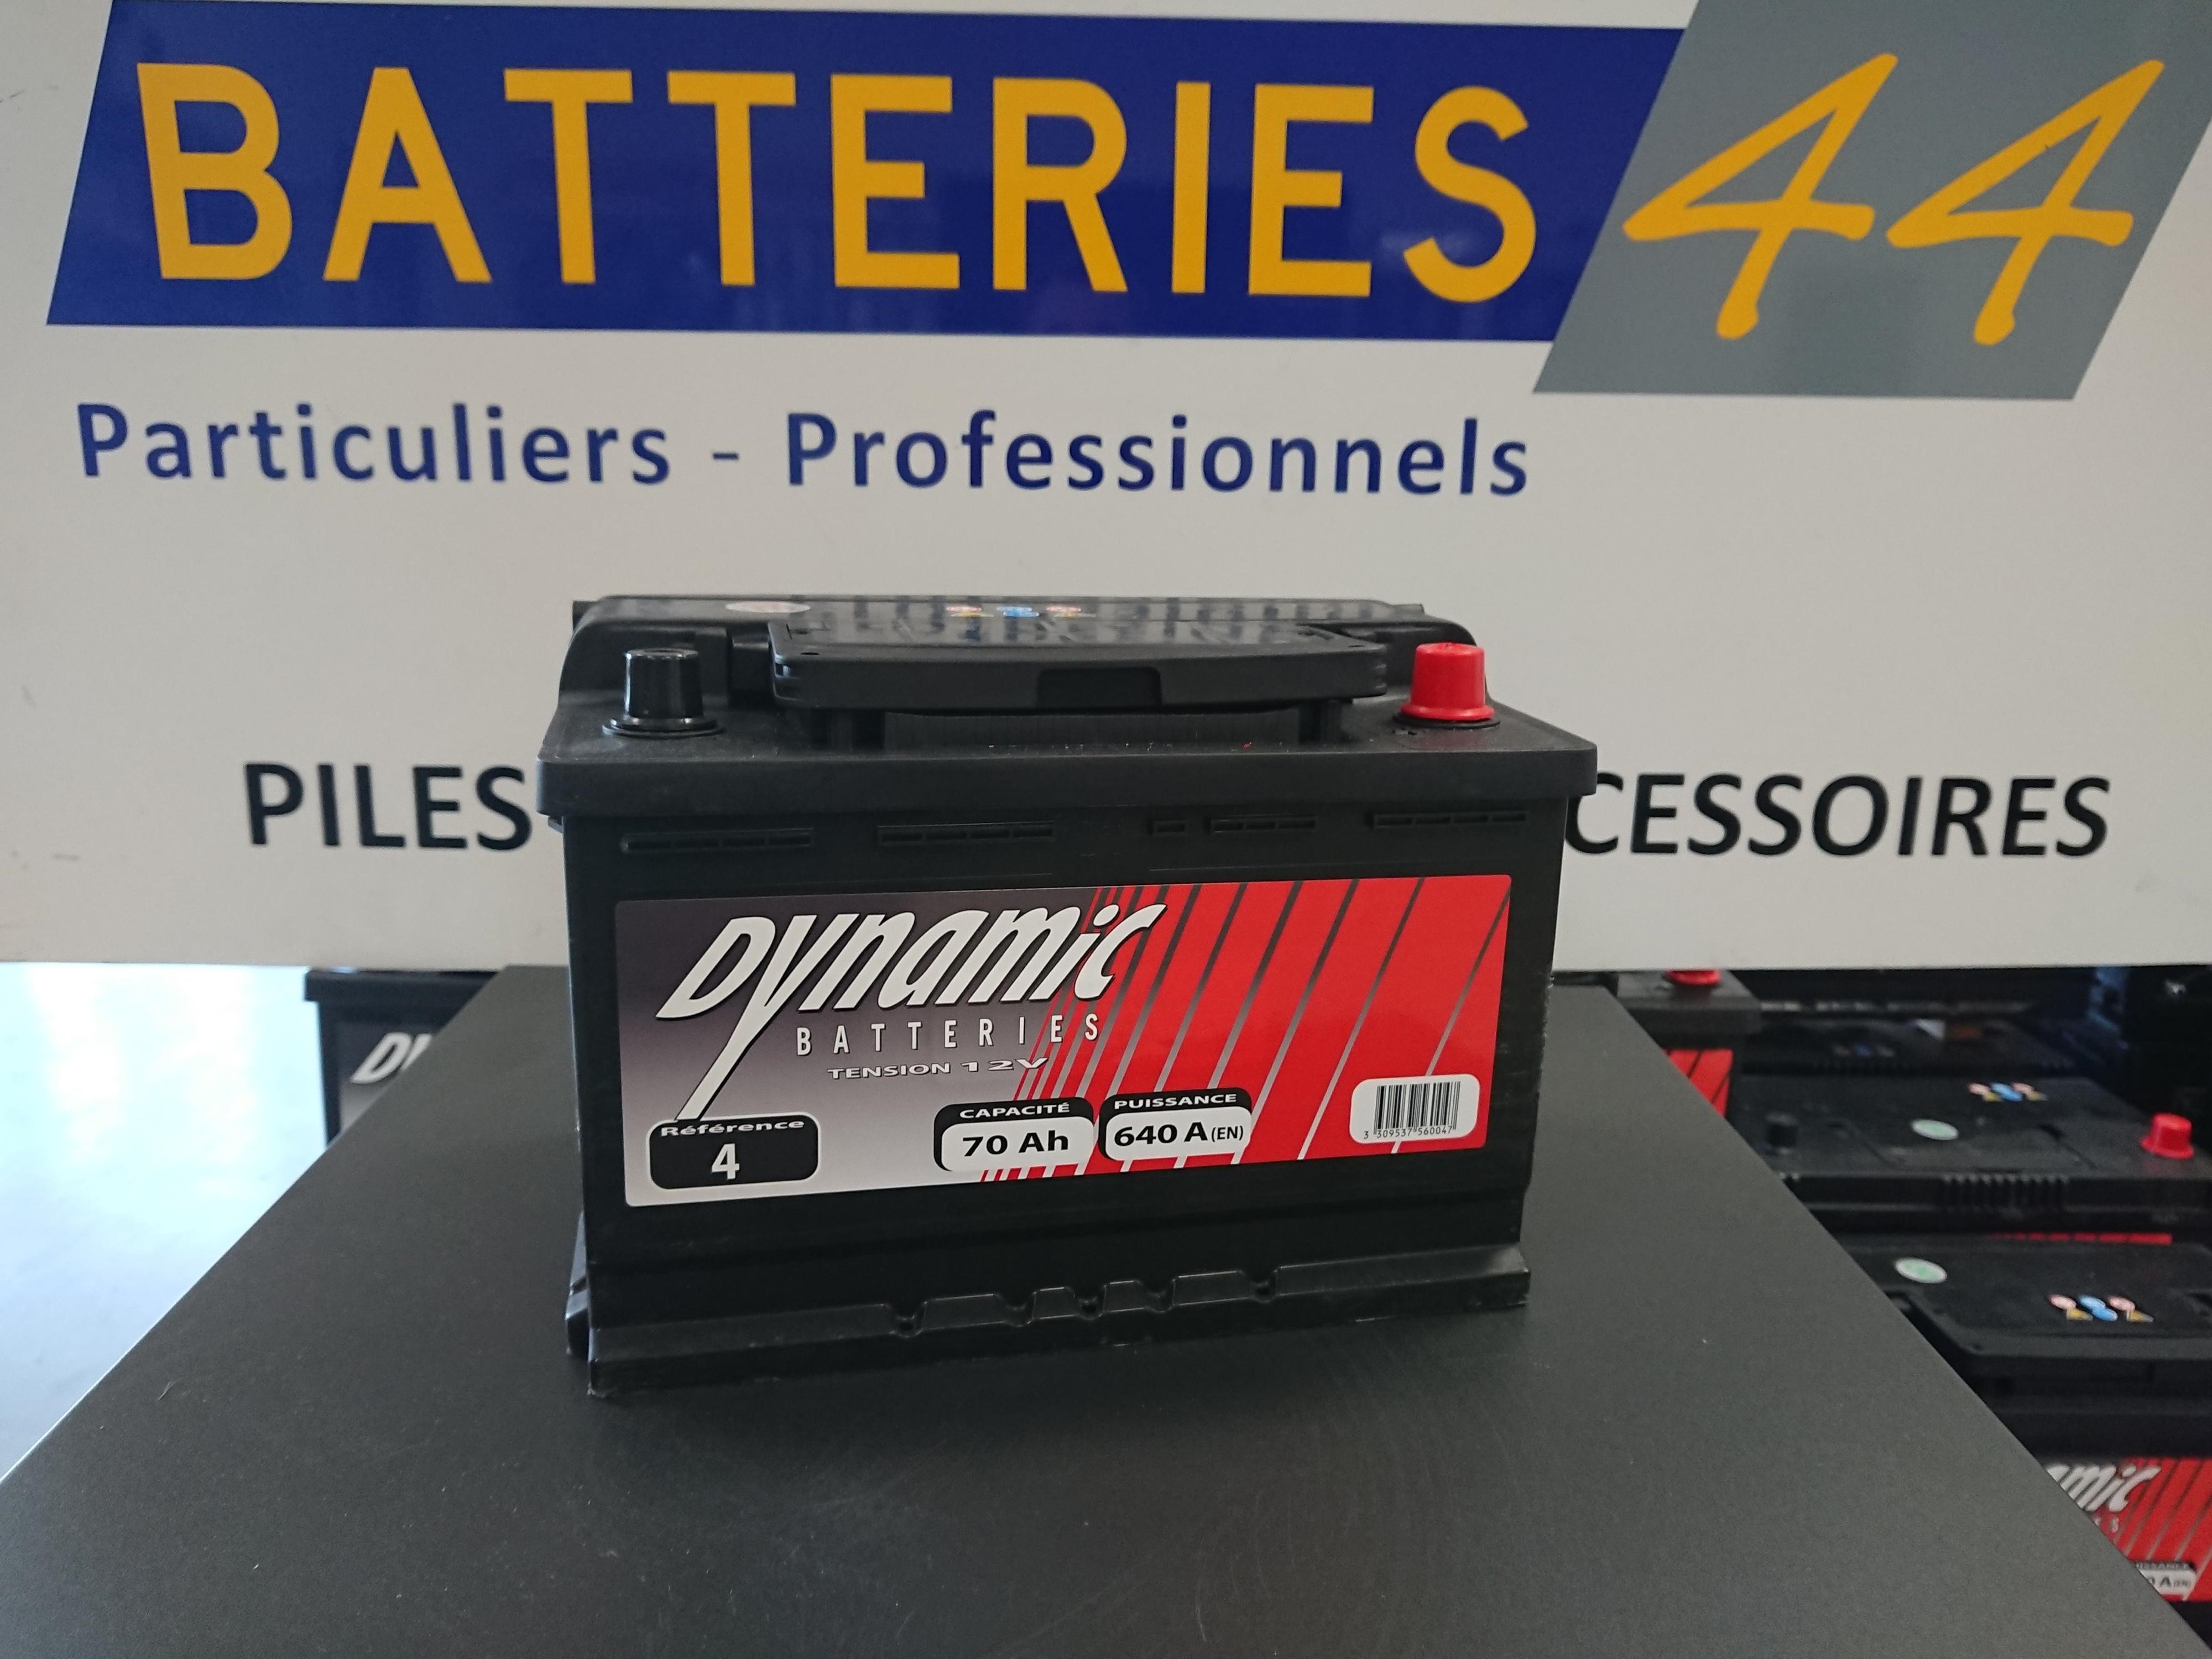 Batterie démarrage Dynamic 12V 65AH 540A